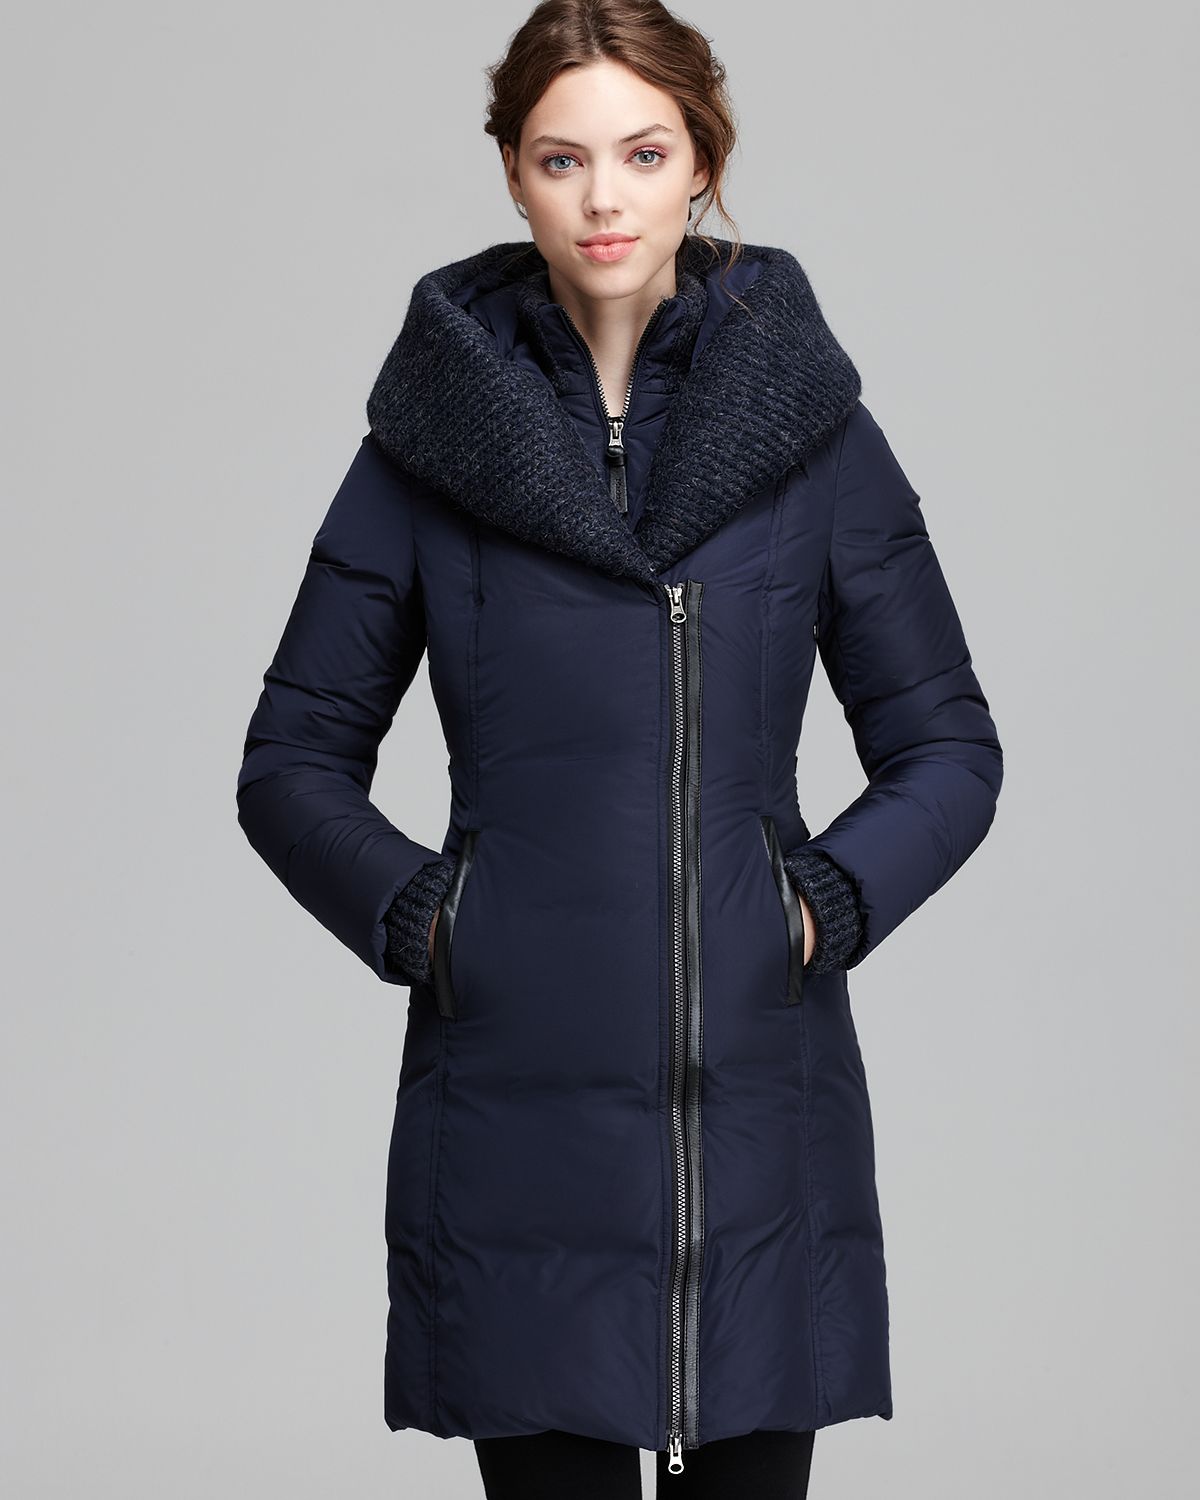 Down Winter Coats Women - Tradingbasis